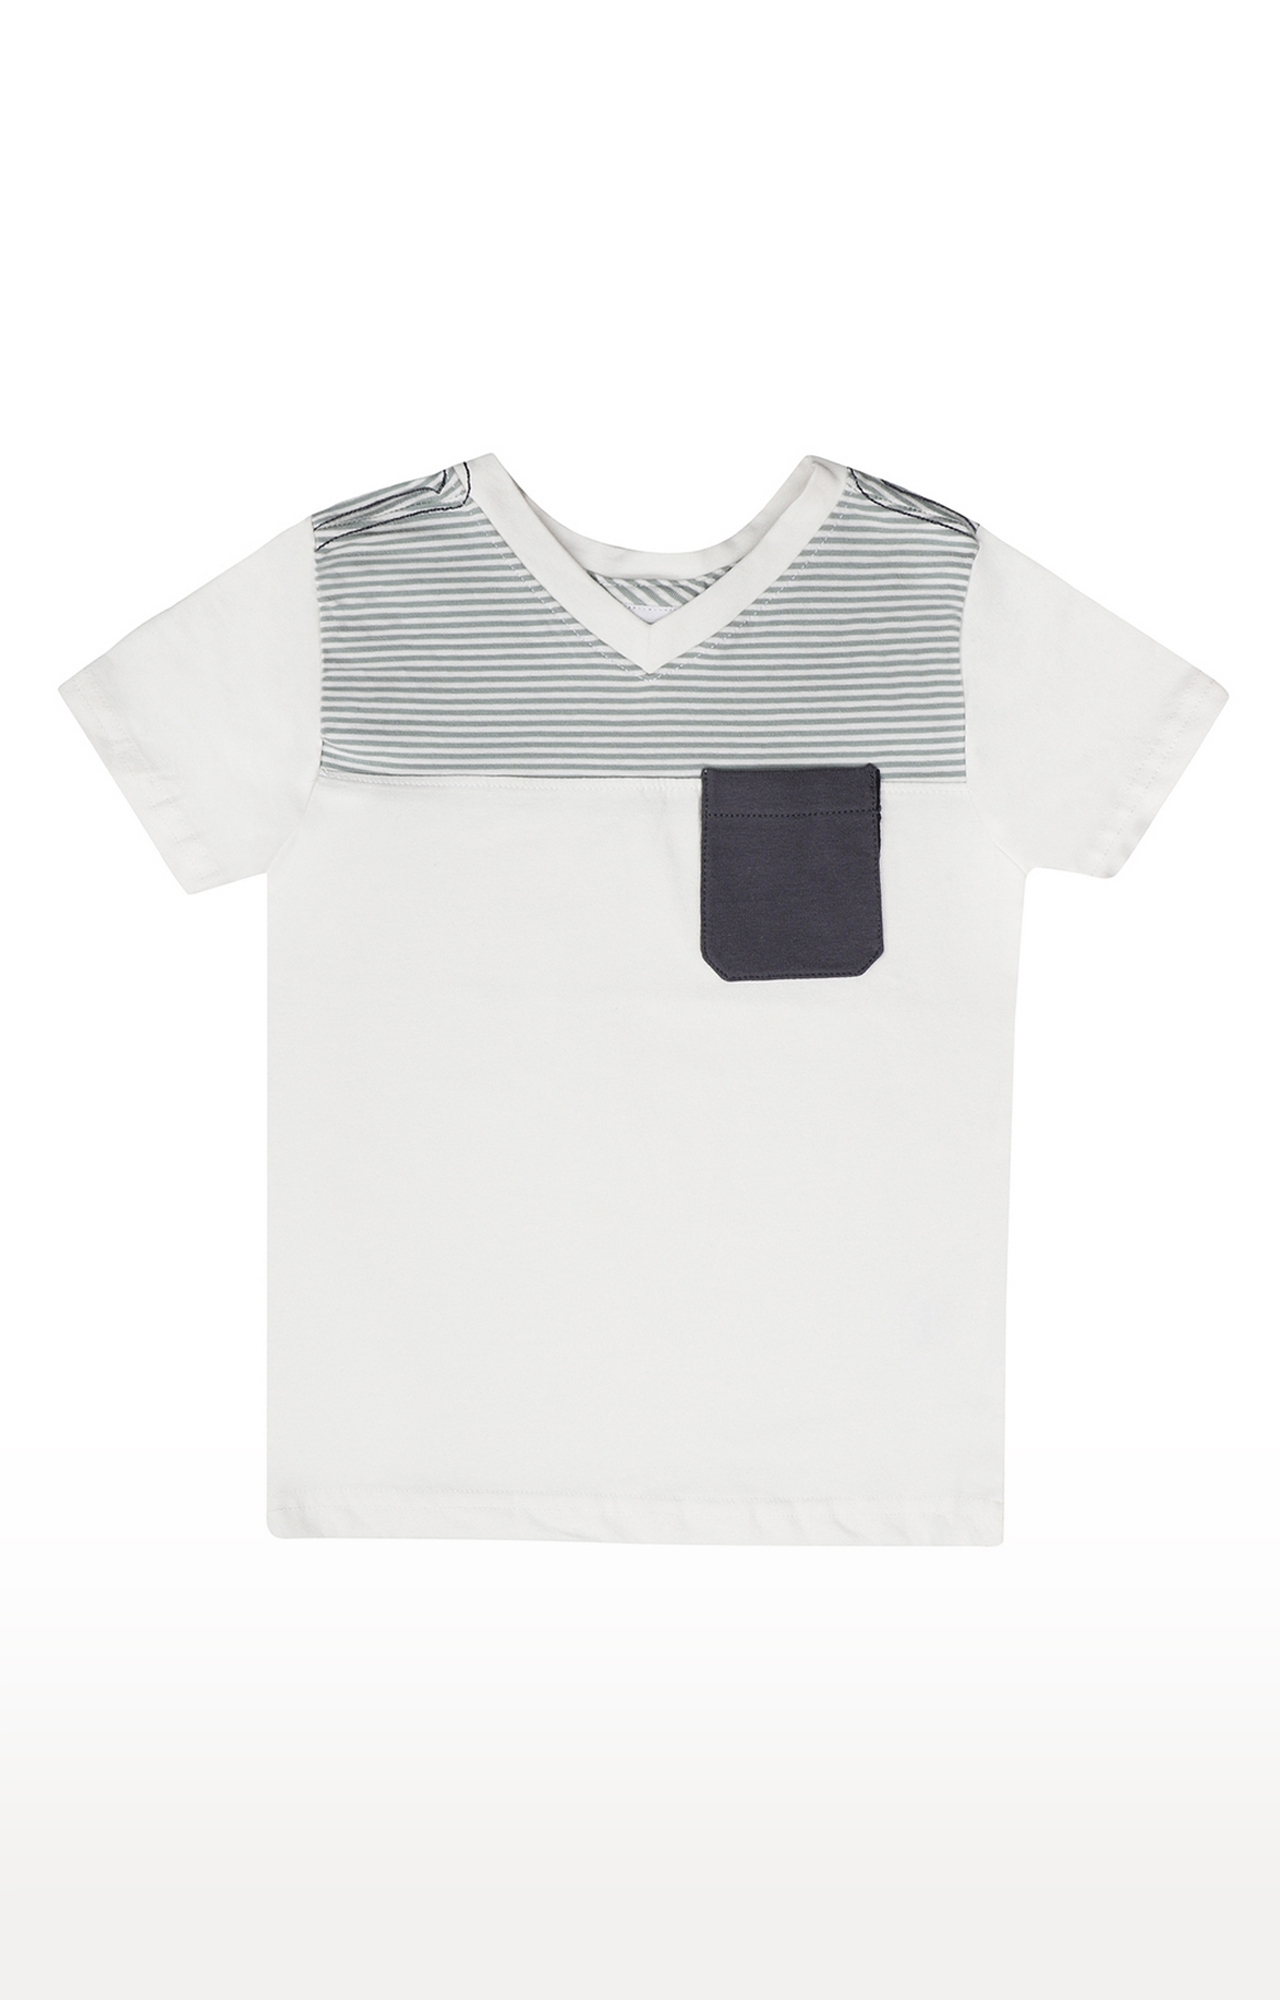 Popsicles Clothing | Popsicles Soft Cotton Comfort fit V-Neck Short Sleeves Boys T-Shirt - Off White (0-6M) 0